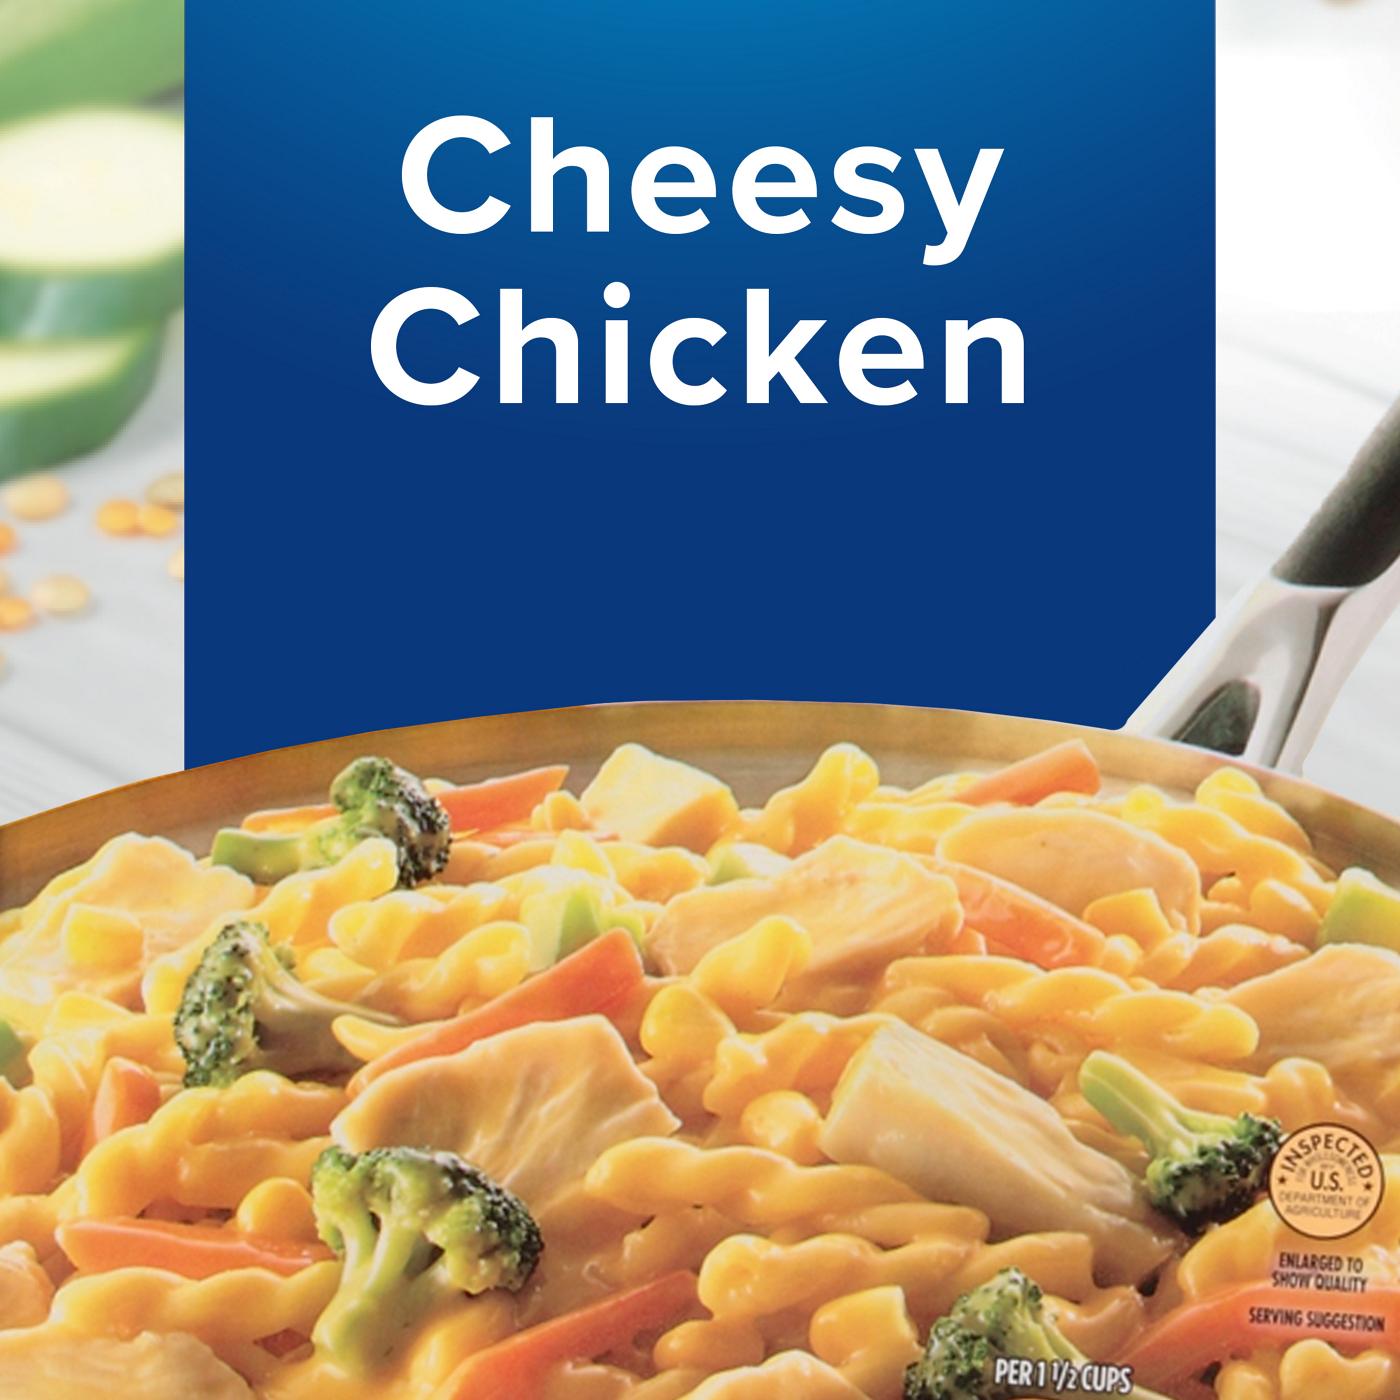 Birds Eye Voila! Frozen Cheesy Chicken Skillet Meal - Family-Size; image 3 of 3